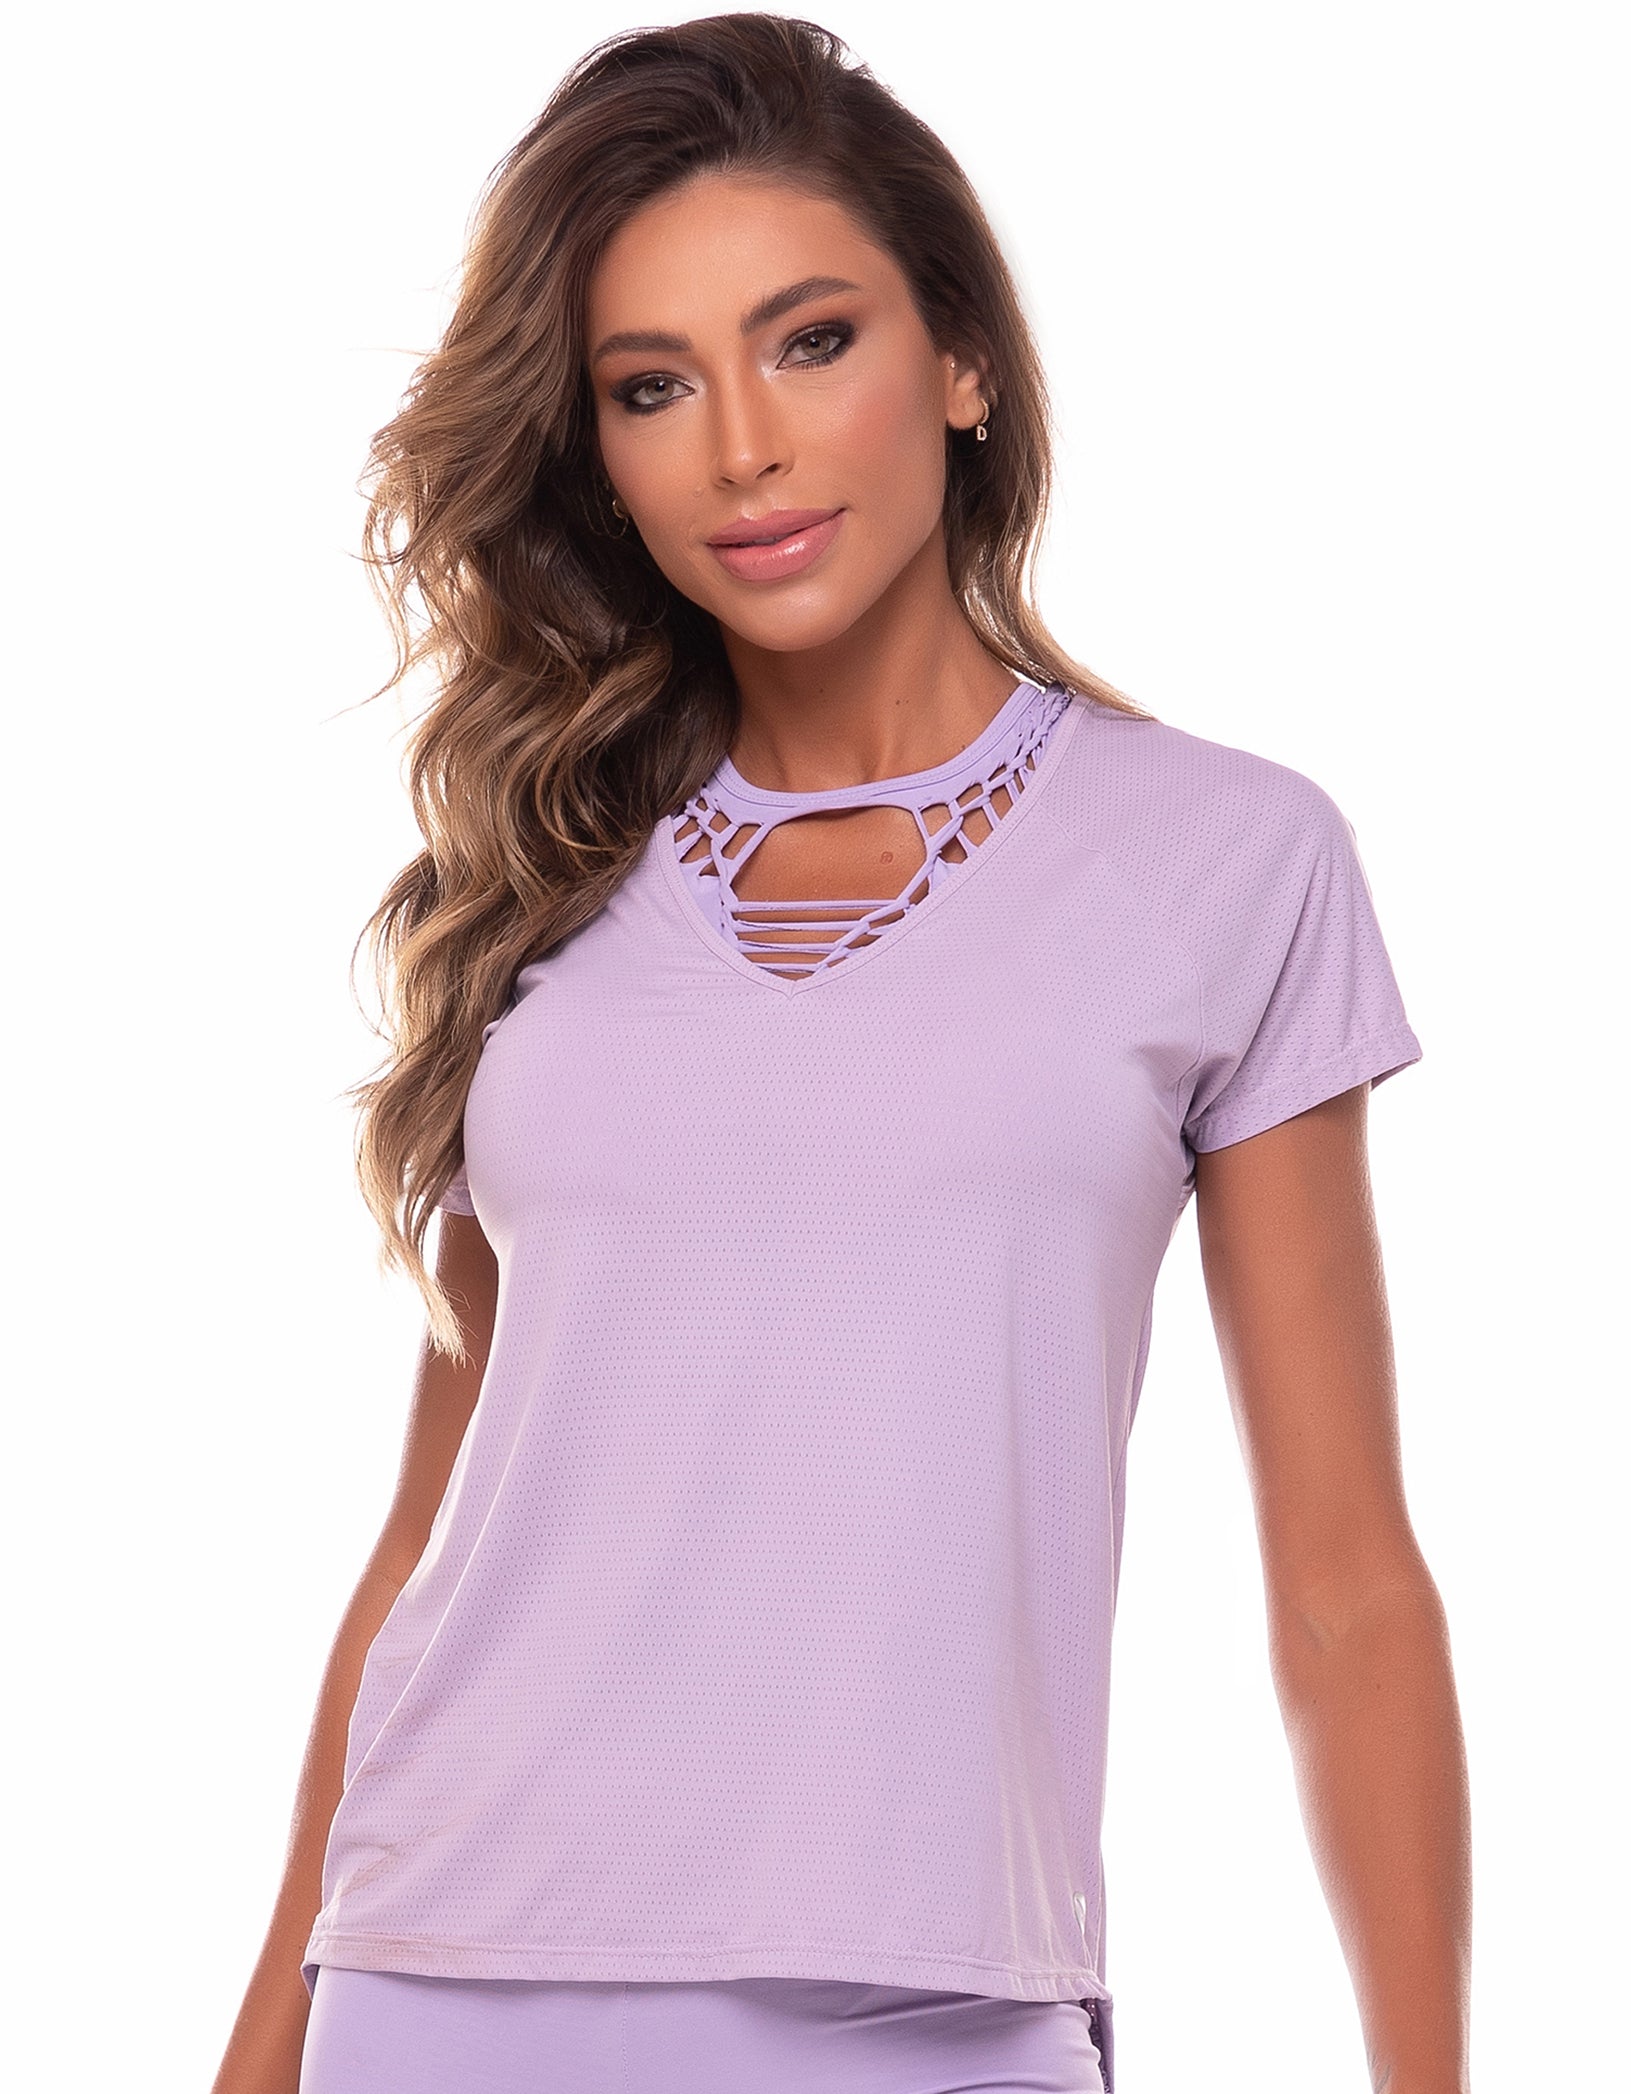 Vestem - Shirt Dry Fit Short Sleeve Only Lilac Pink - BMC328.C0023